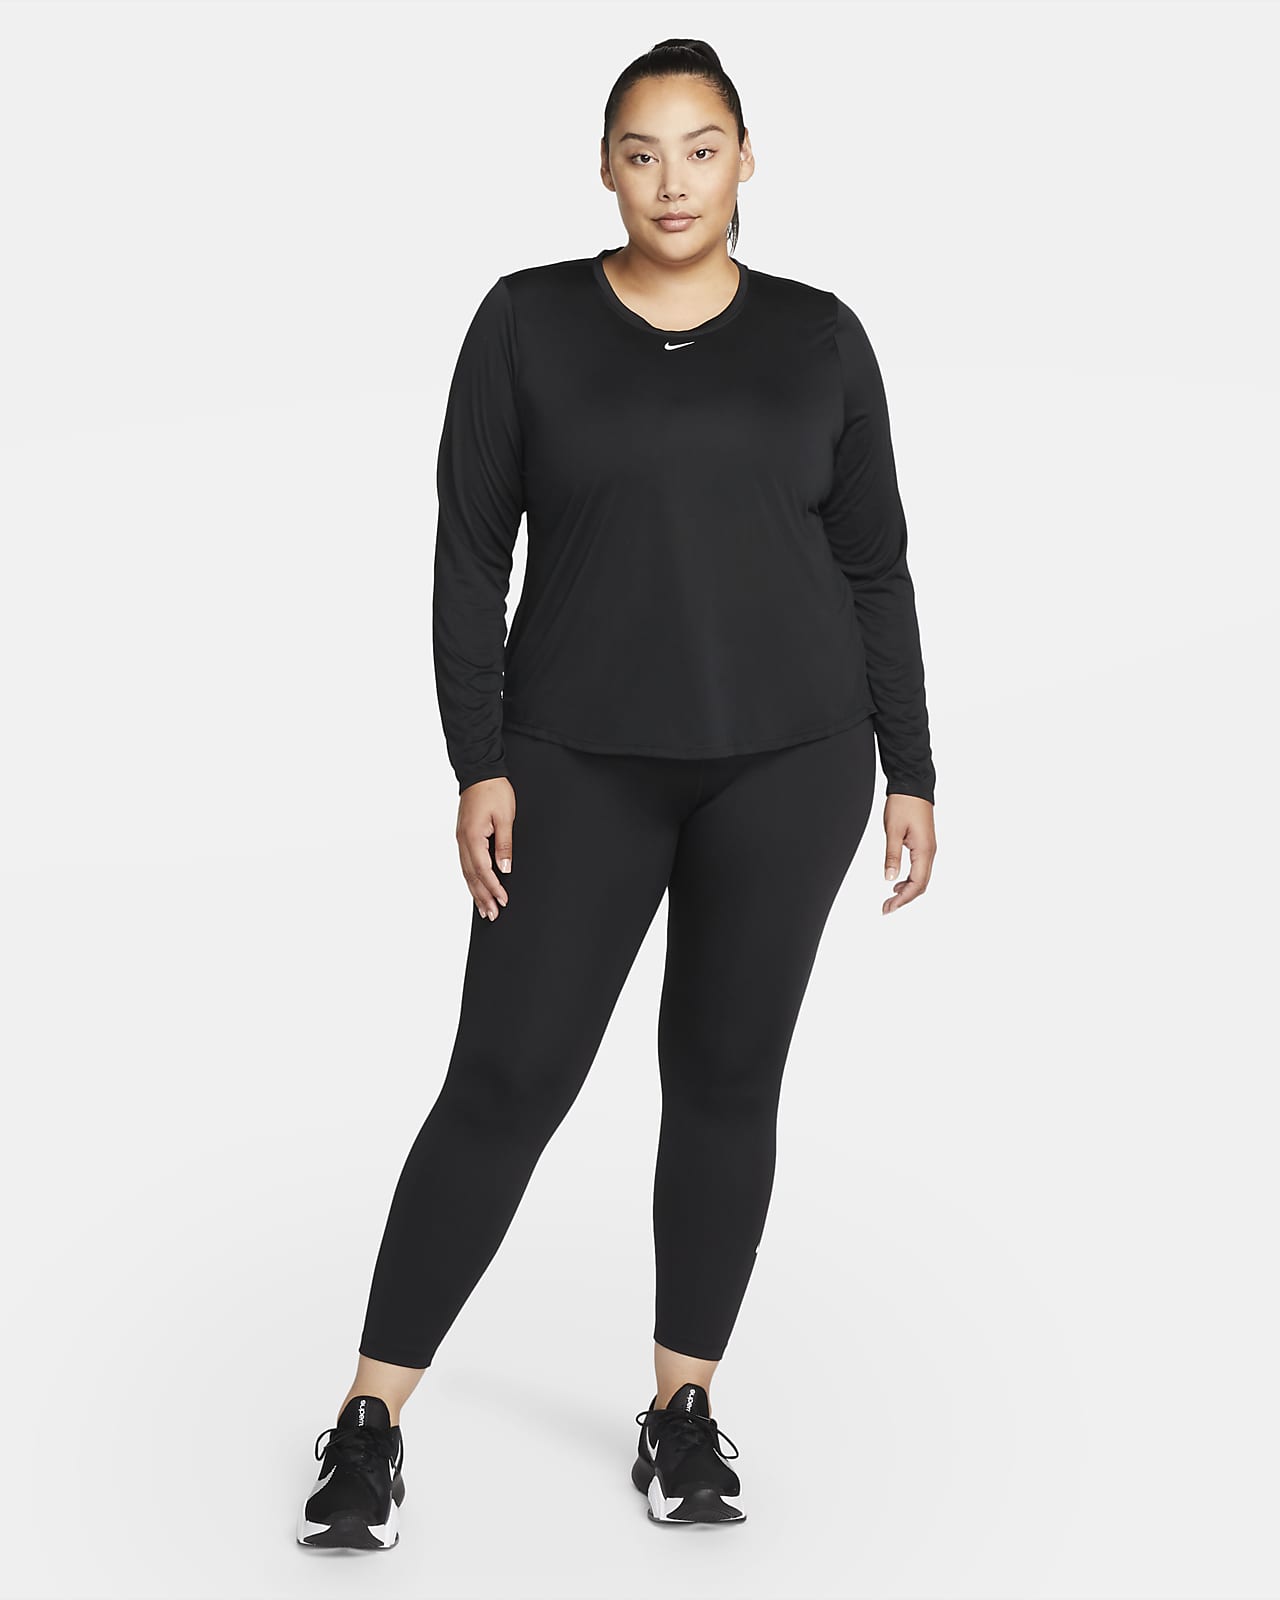 Nike Dri-fit Flared Yoga Full Length Pants in Black